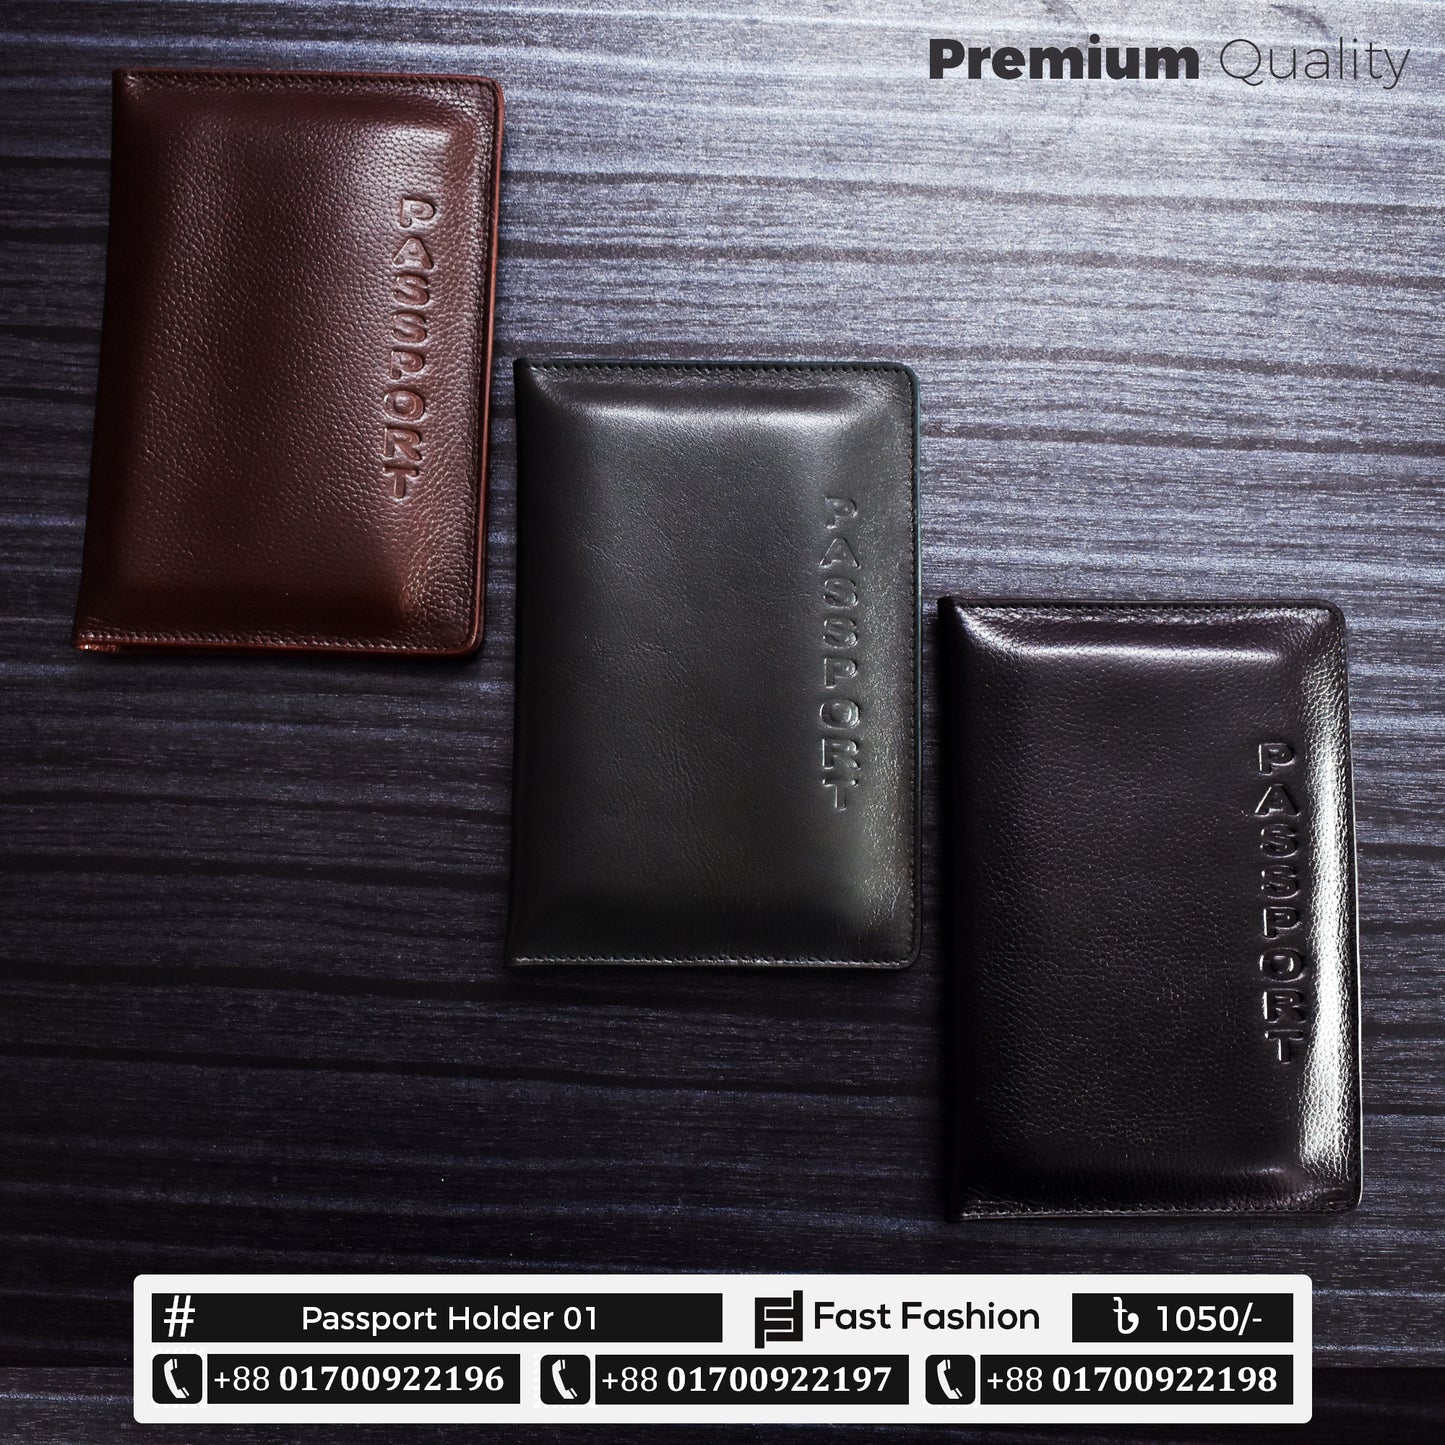 Premium Quality Original Leather Passport Holder | Passport Holder 01